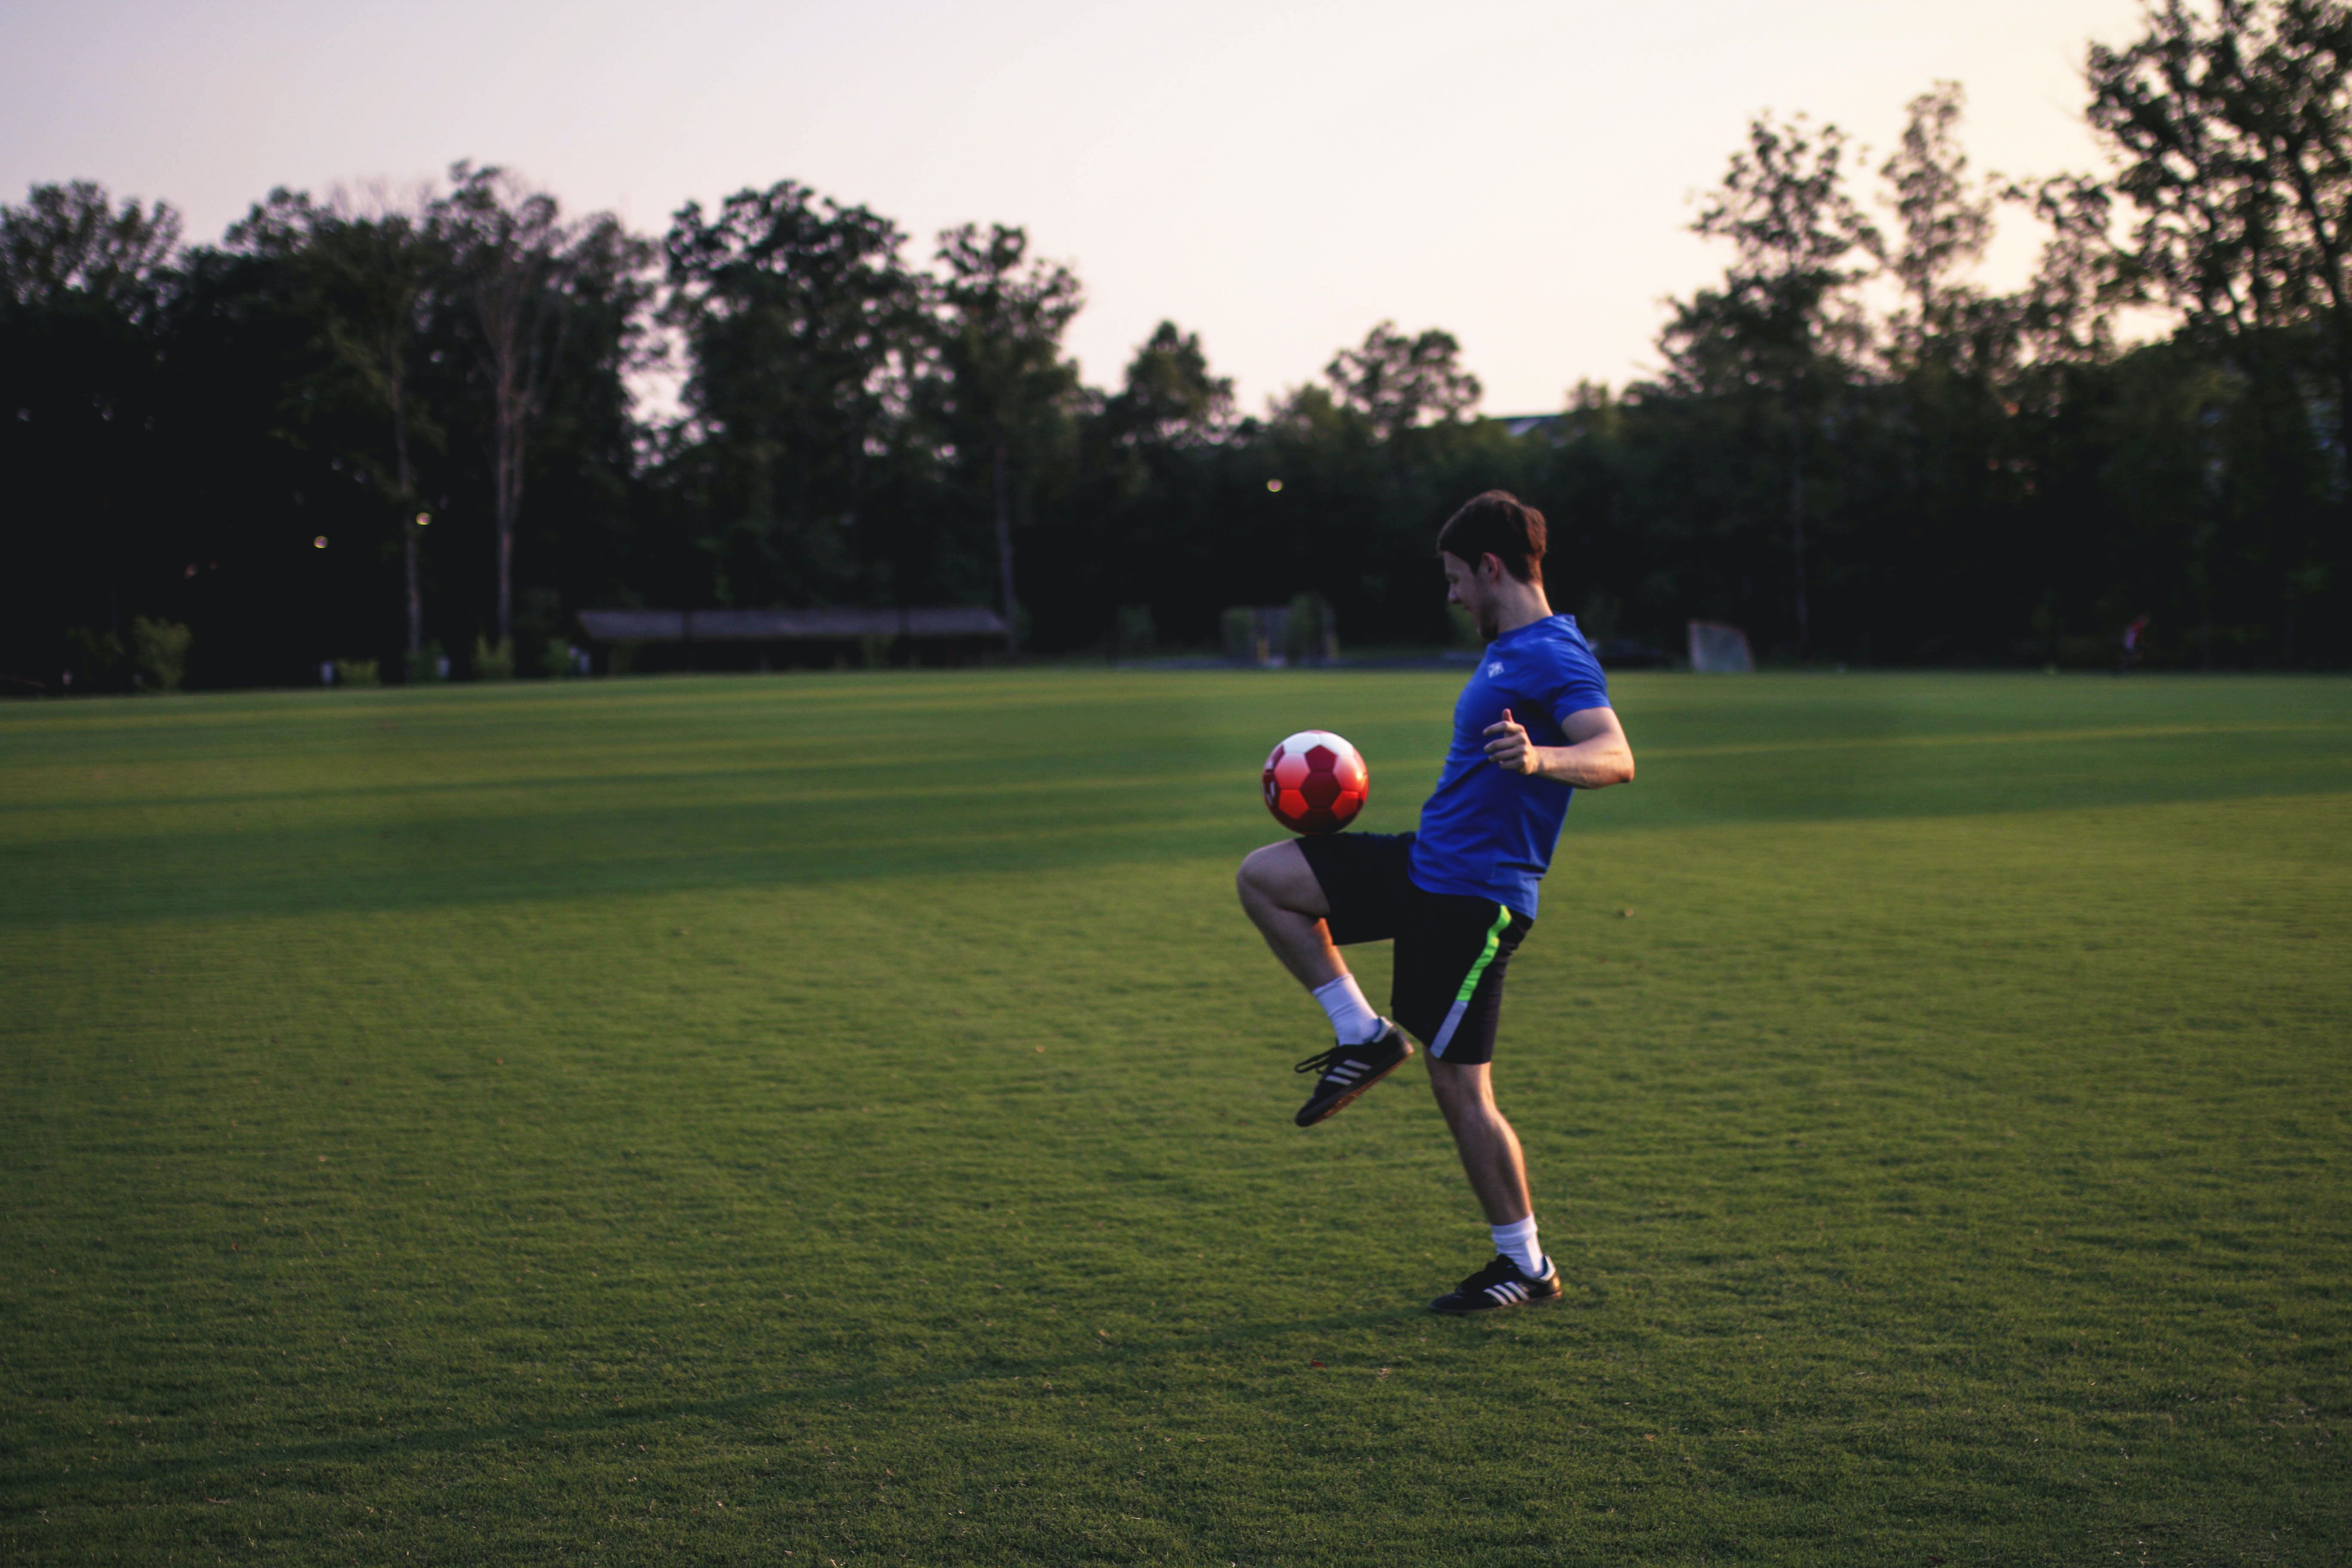 A boy dribbling a soccer ball.